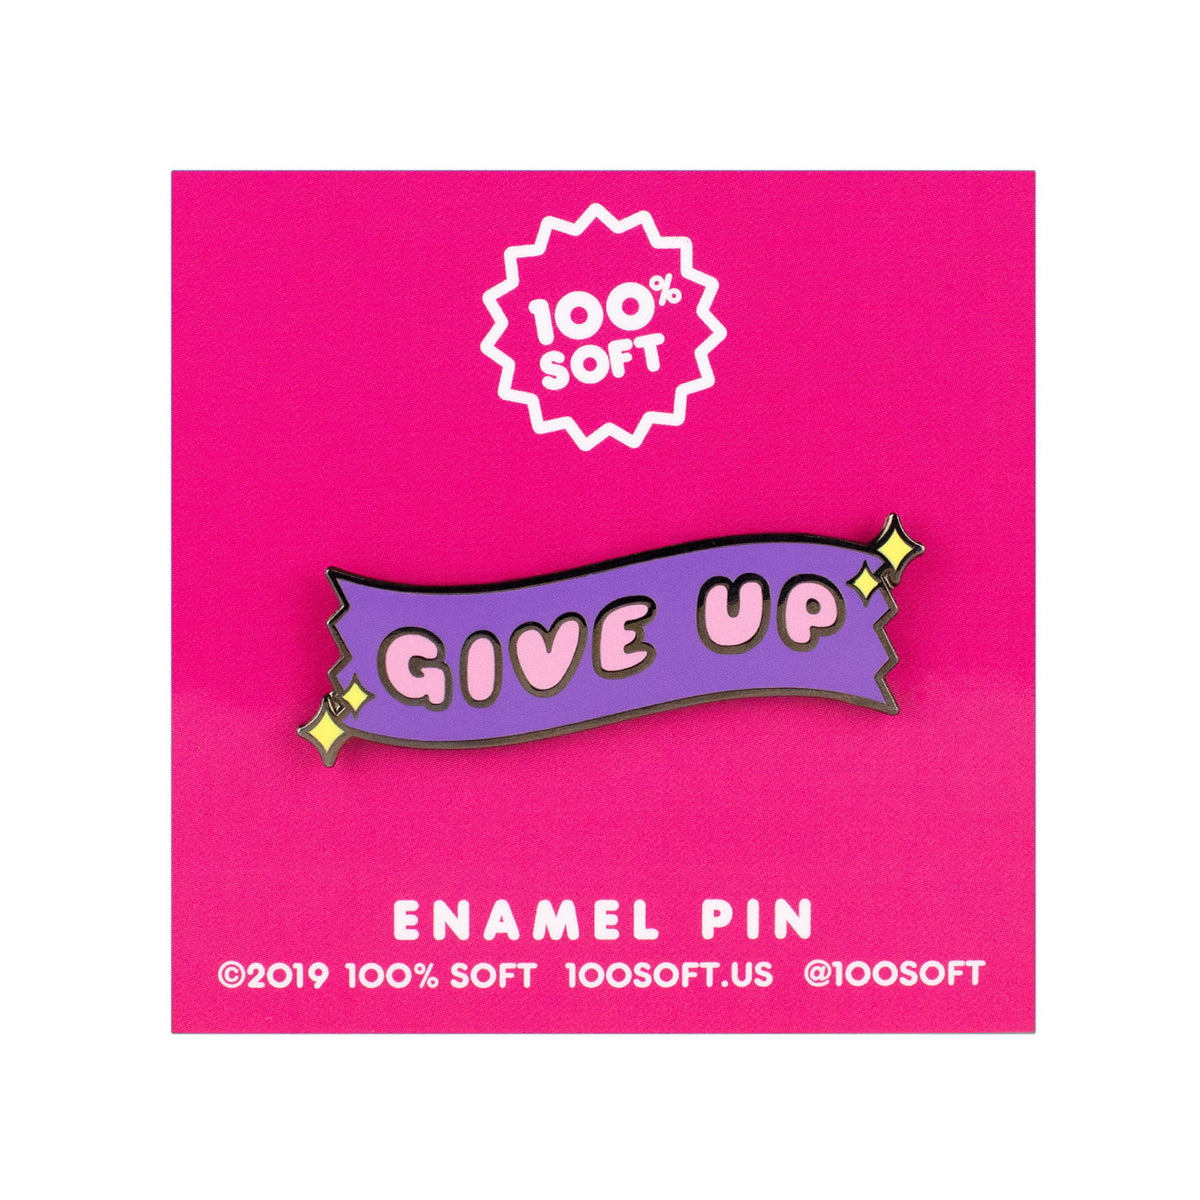 Give Up Enamel Pin